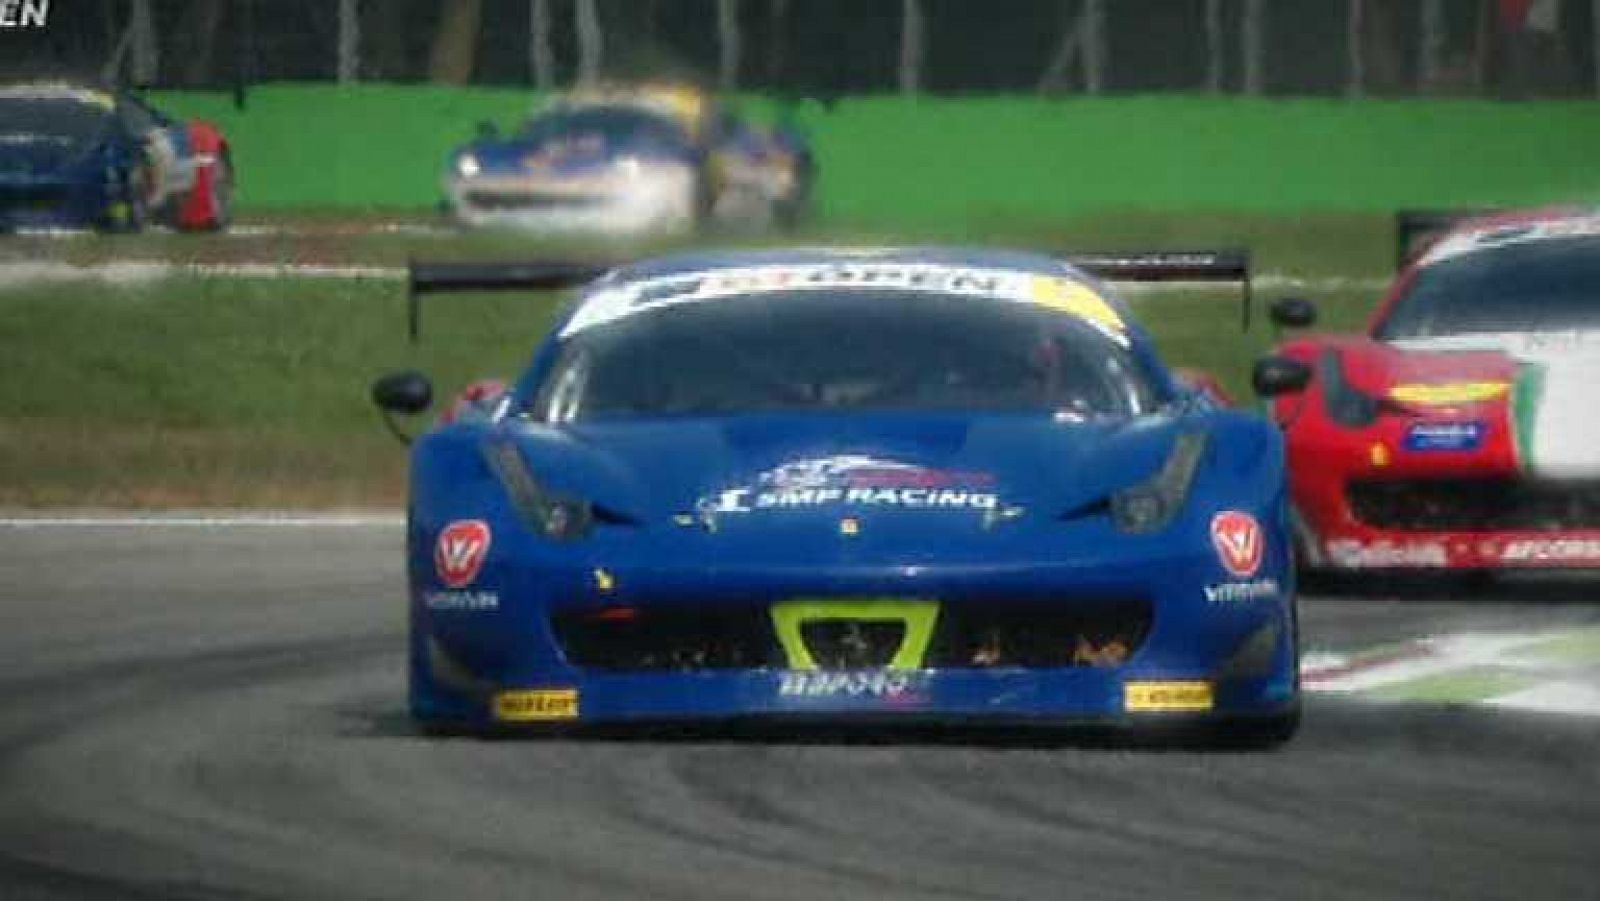 Automovilismo - International GT OPEN 2ª carrera. Desde Monza